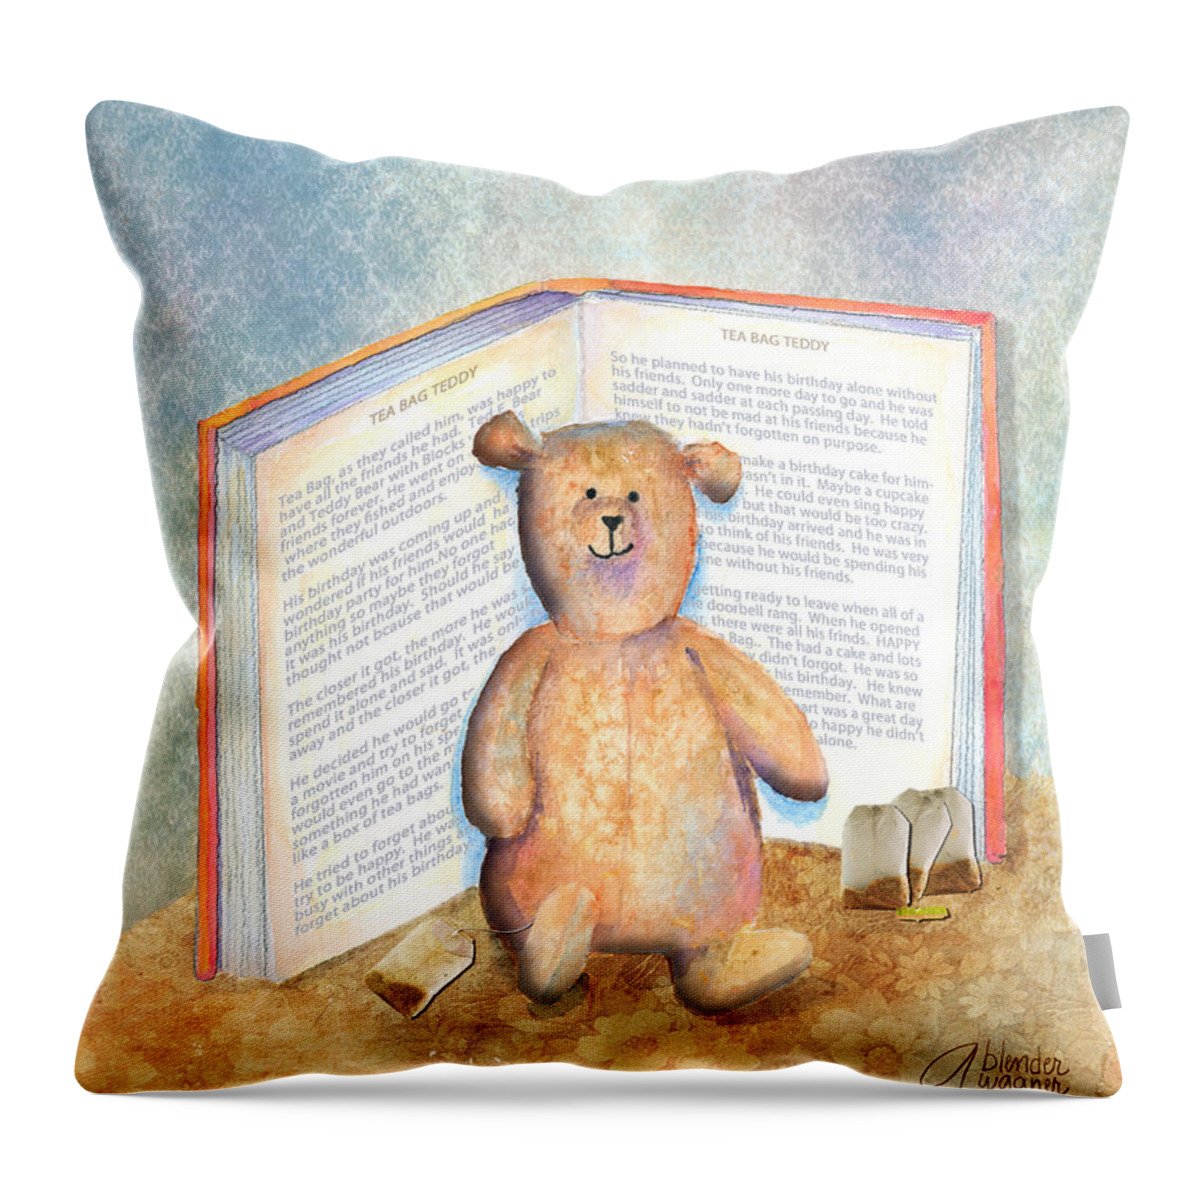 Teddy Bear Throw Pillow featuring the mixed media Tea Bag Teddy by Arline Wagner